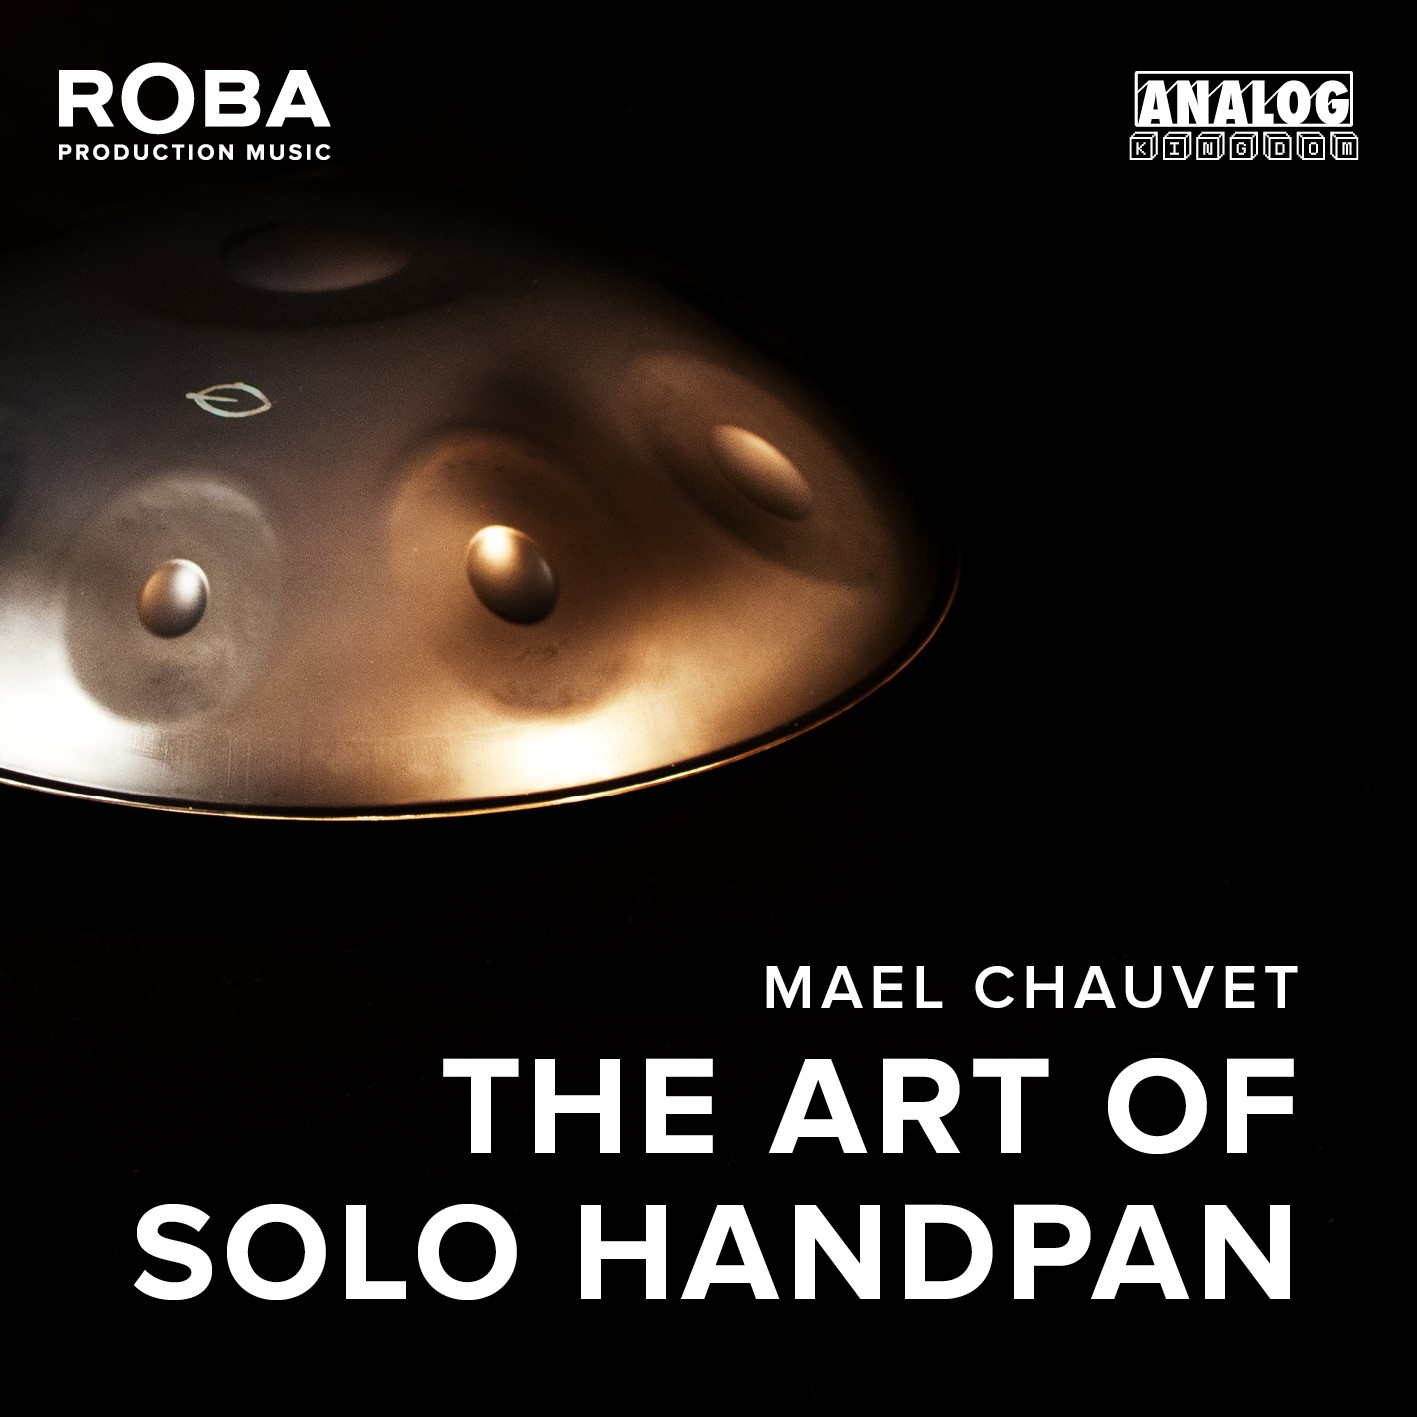 The Art Of Solo Handpan